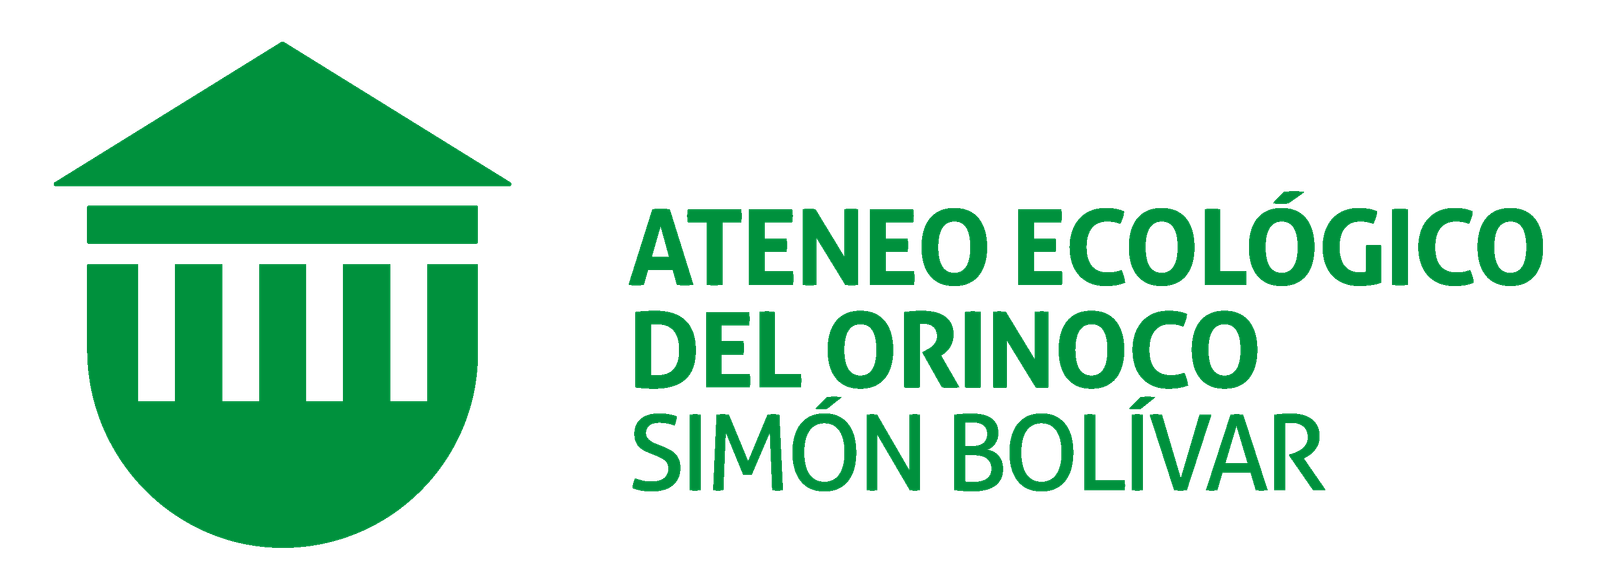 Ateneo Ecológico del Orinoco - Simón Bolívar